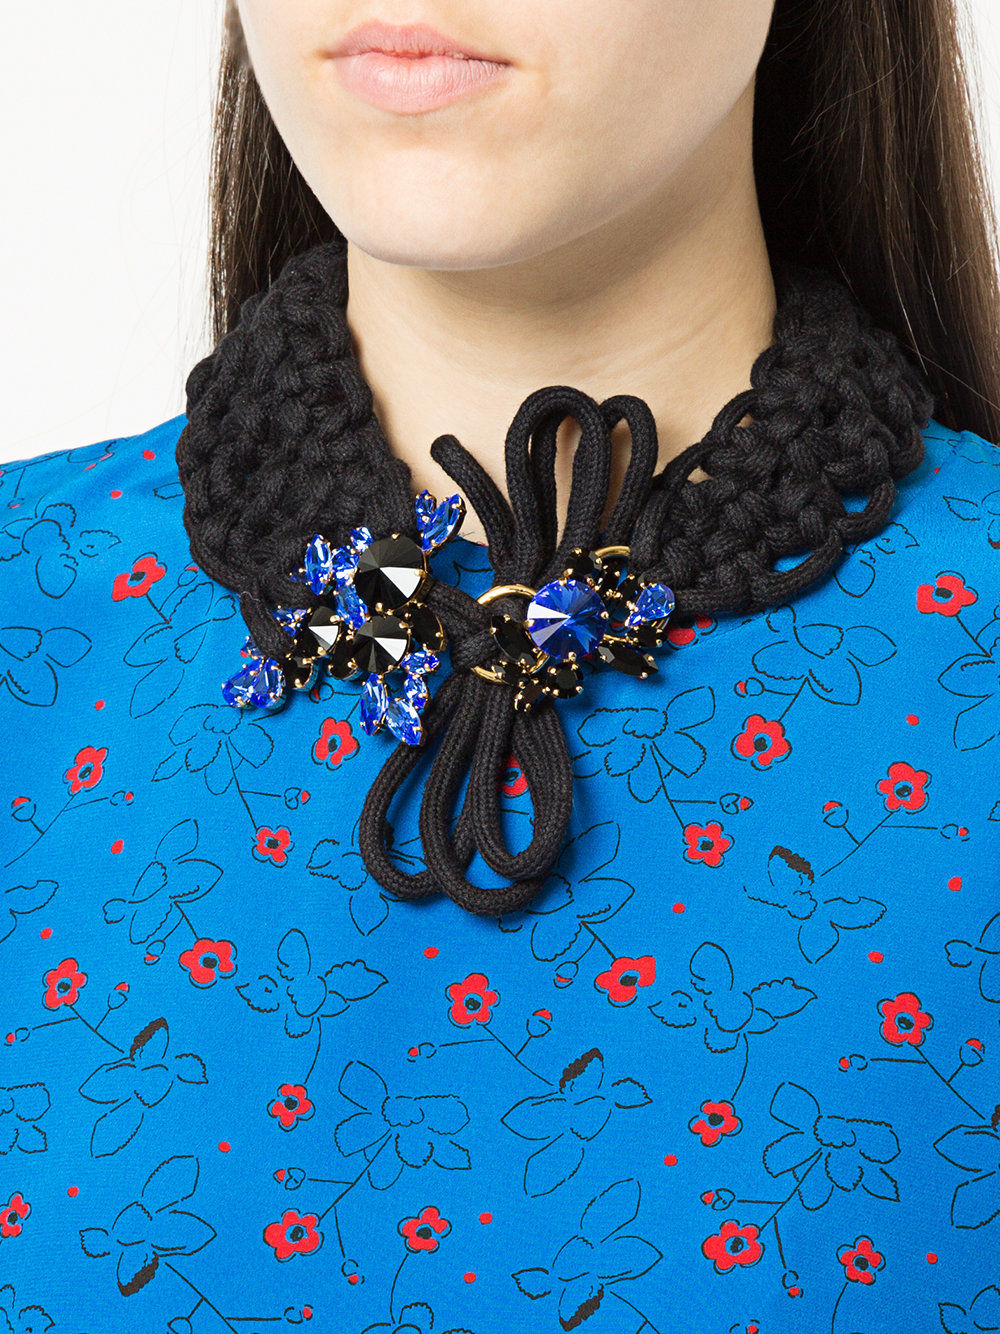 Marni's macramé embellished necklace